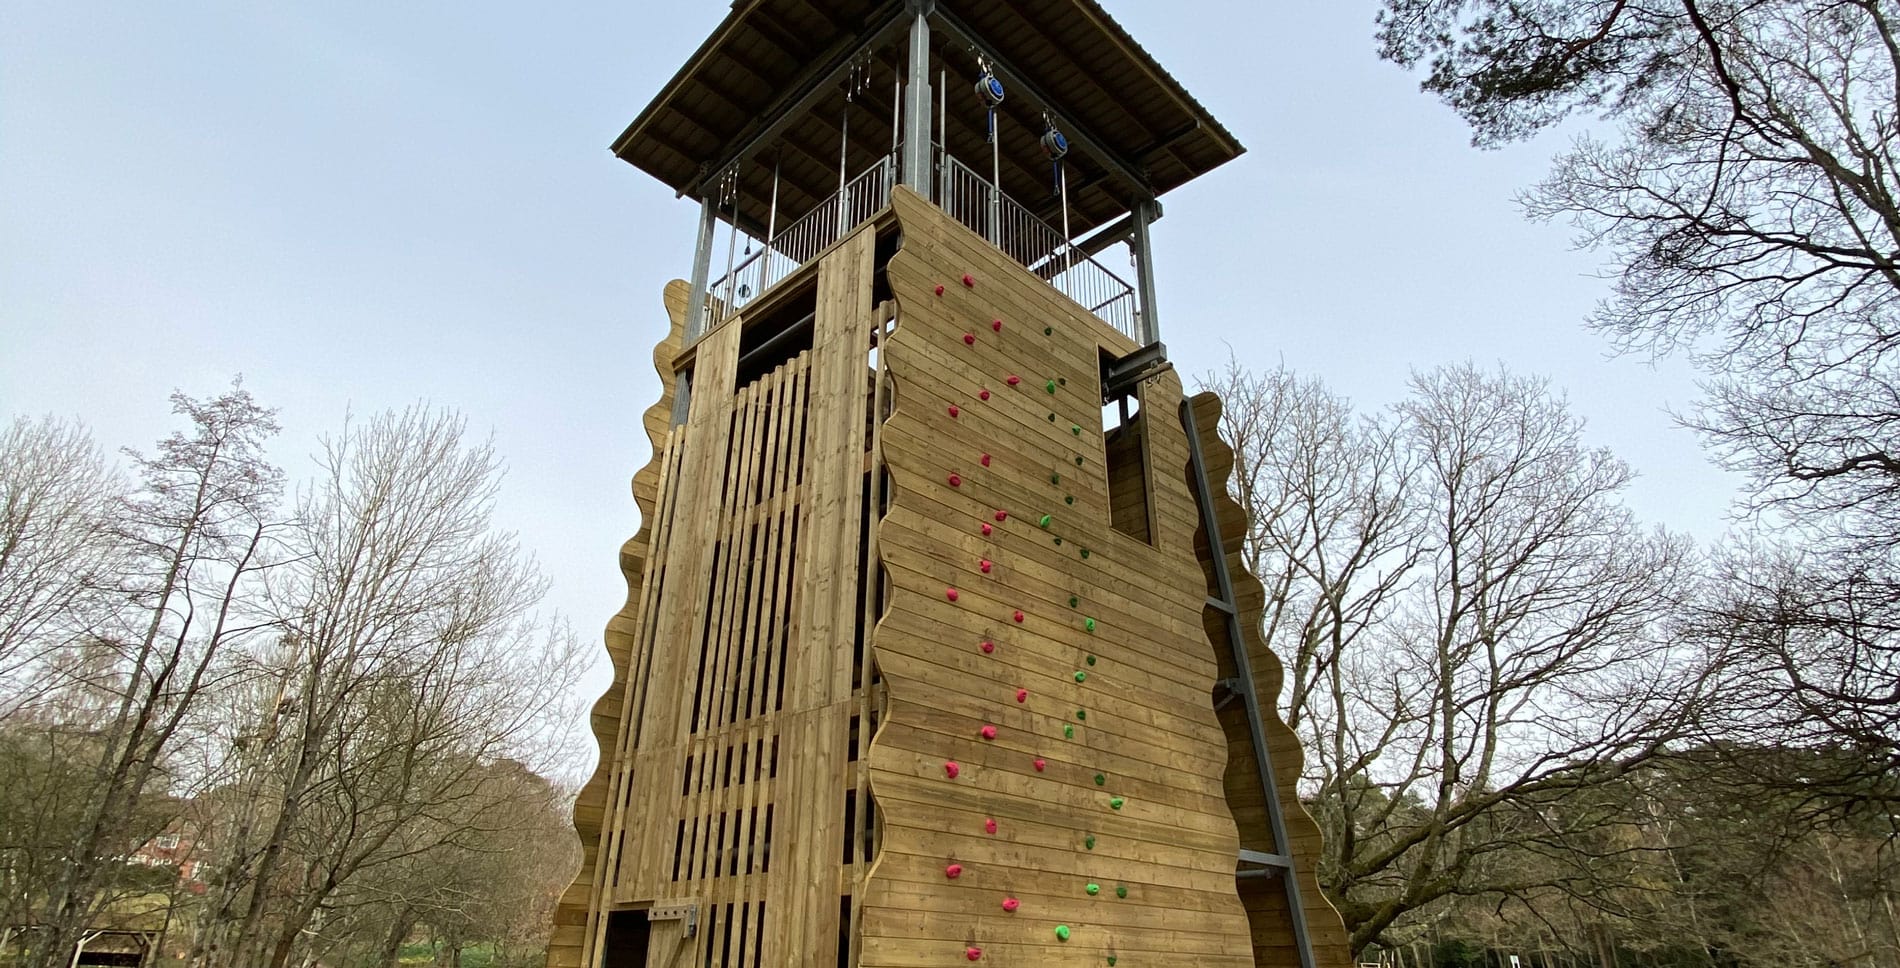 Avon Tyrell climbing tower construction